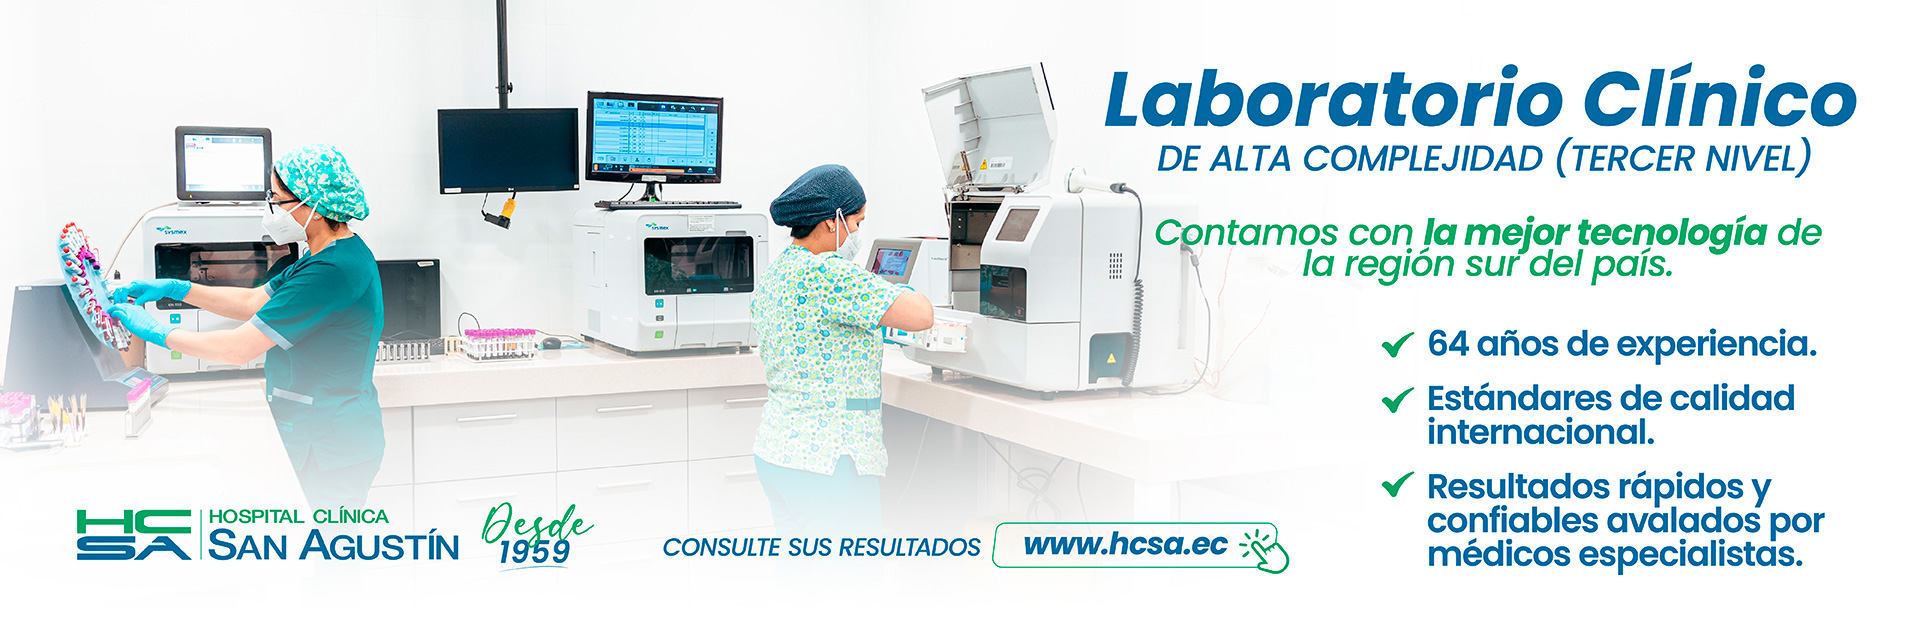 Laboratorio Clínico de Alta Complejidad | Hospital Clínica San Agustín